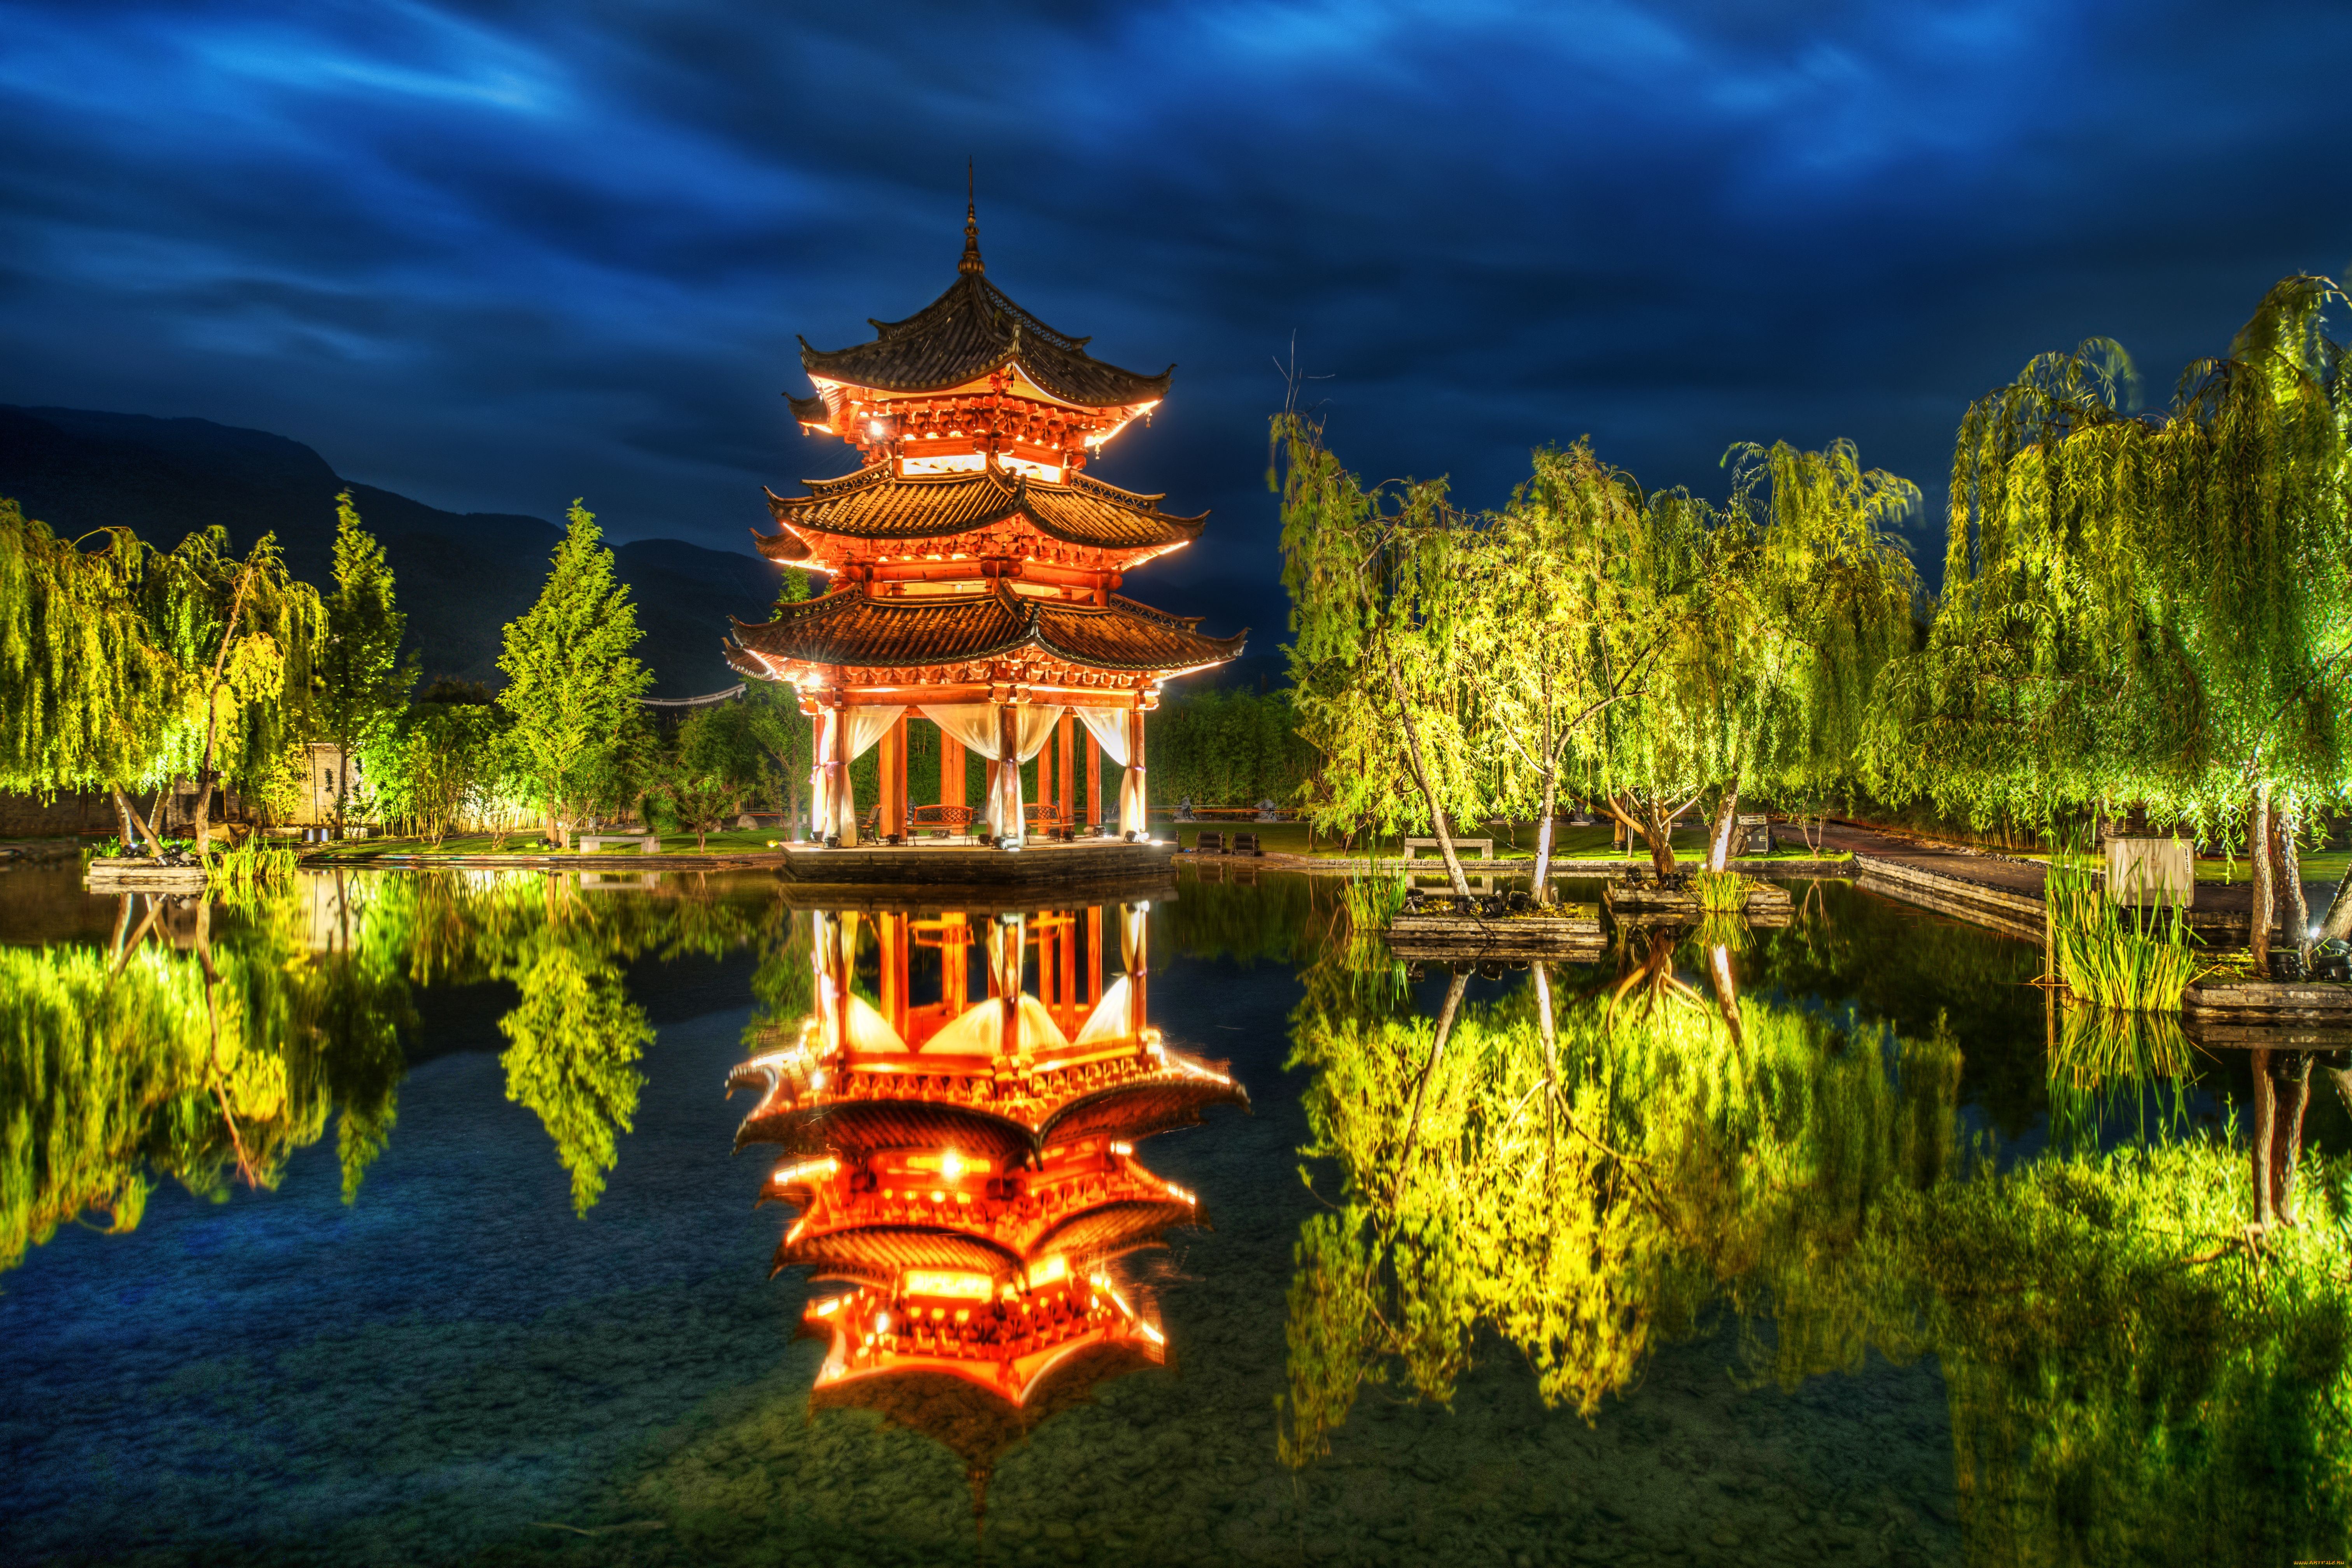 Озеро азии 4. Китай парк пагода. Китай Лицзян храм. Китайская Падога. Пагода лес Китай.